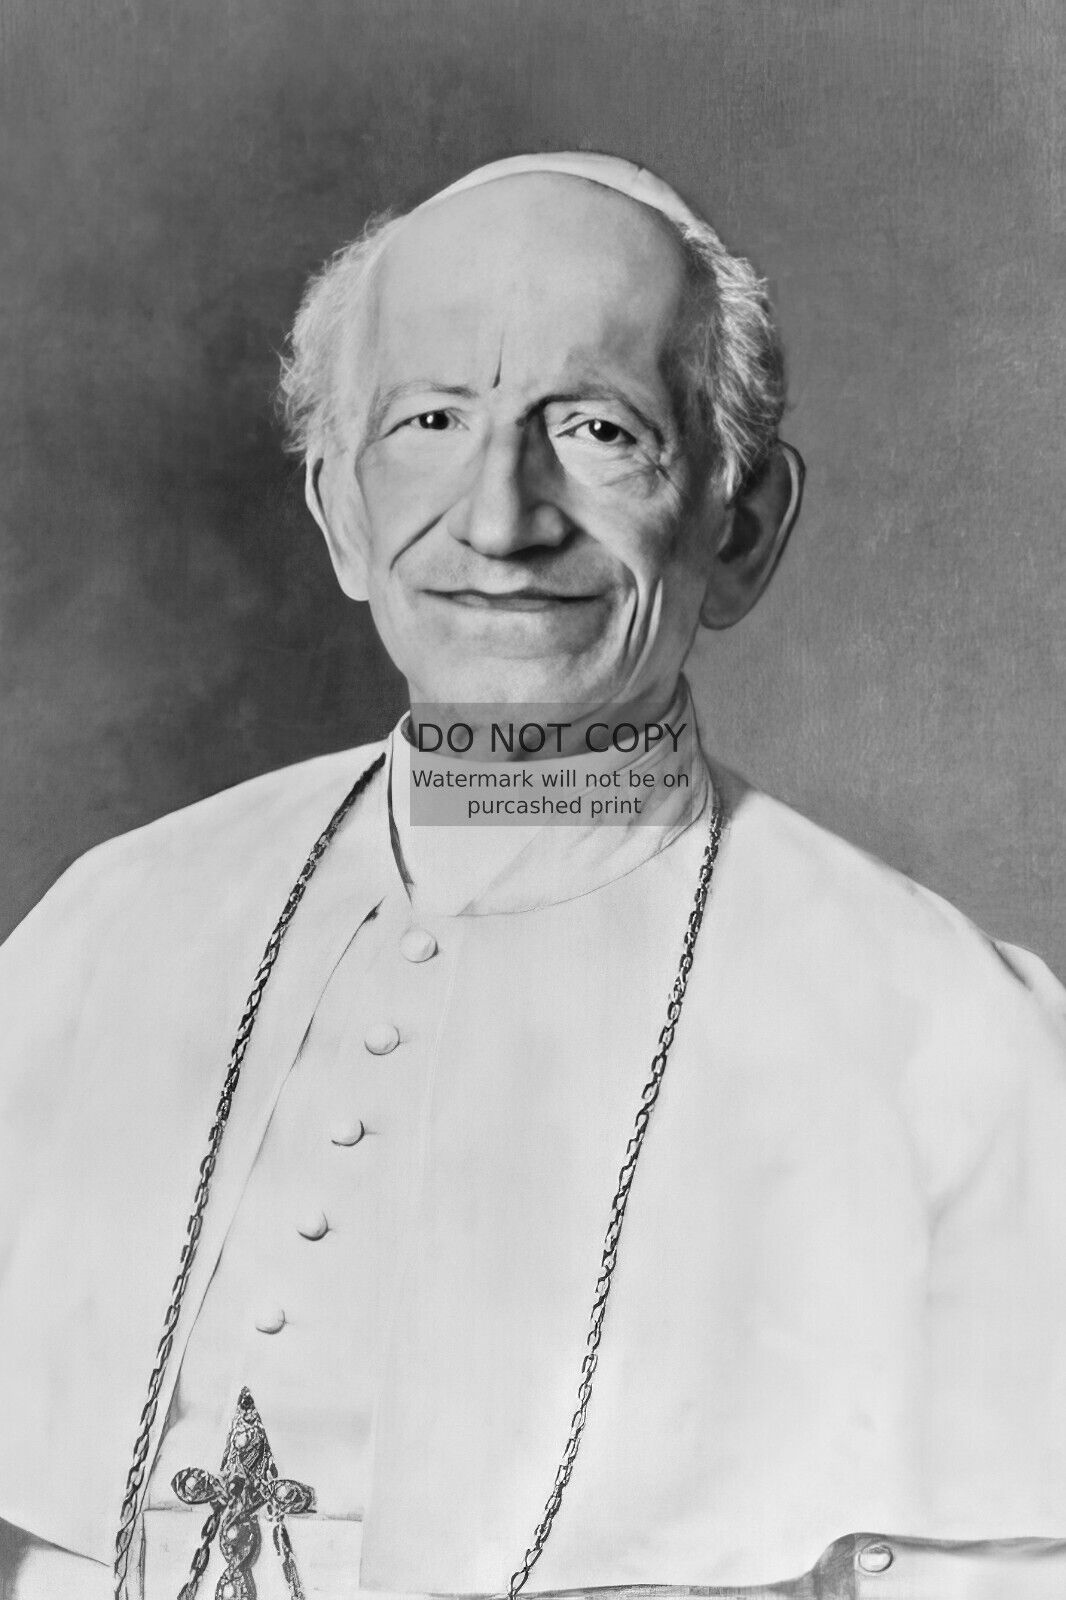 POPE LEO XIII HEAD OF CATHOLIC CHURCH & VATICAN STATE 4X6 B&W PHOTO POSTCARD